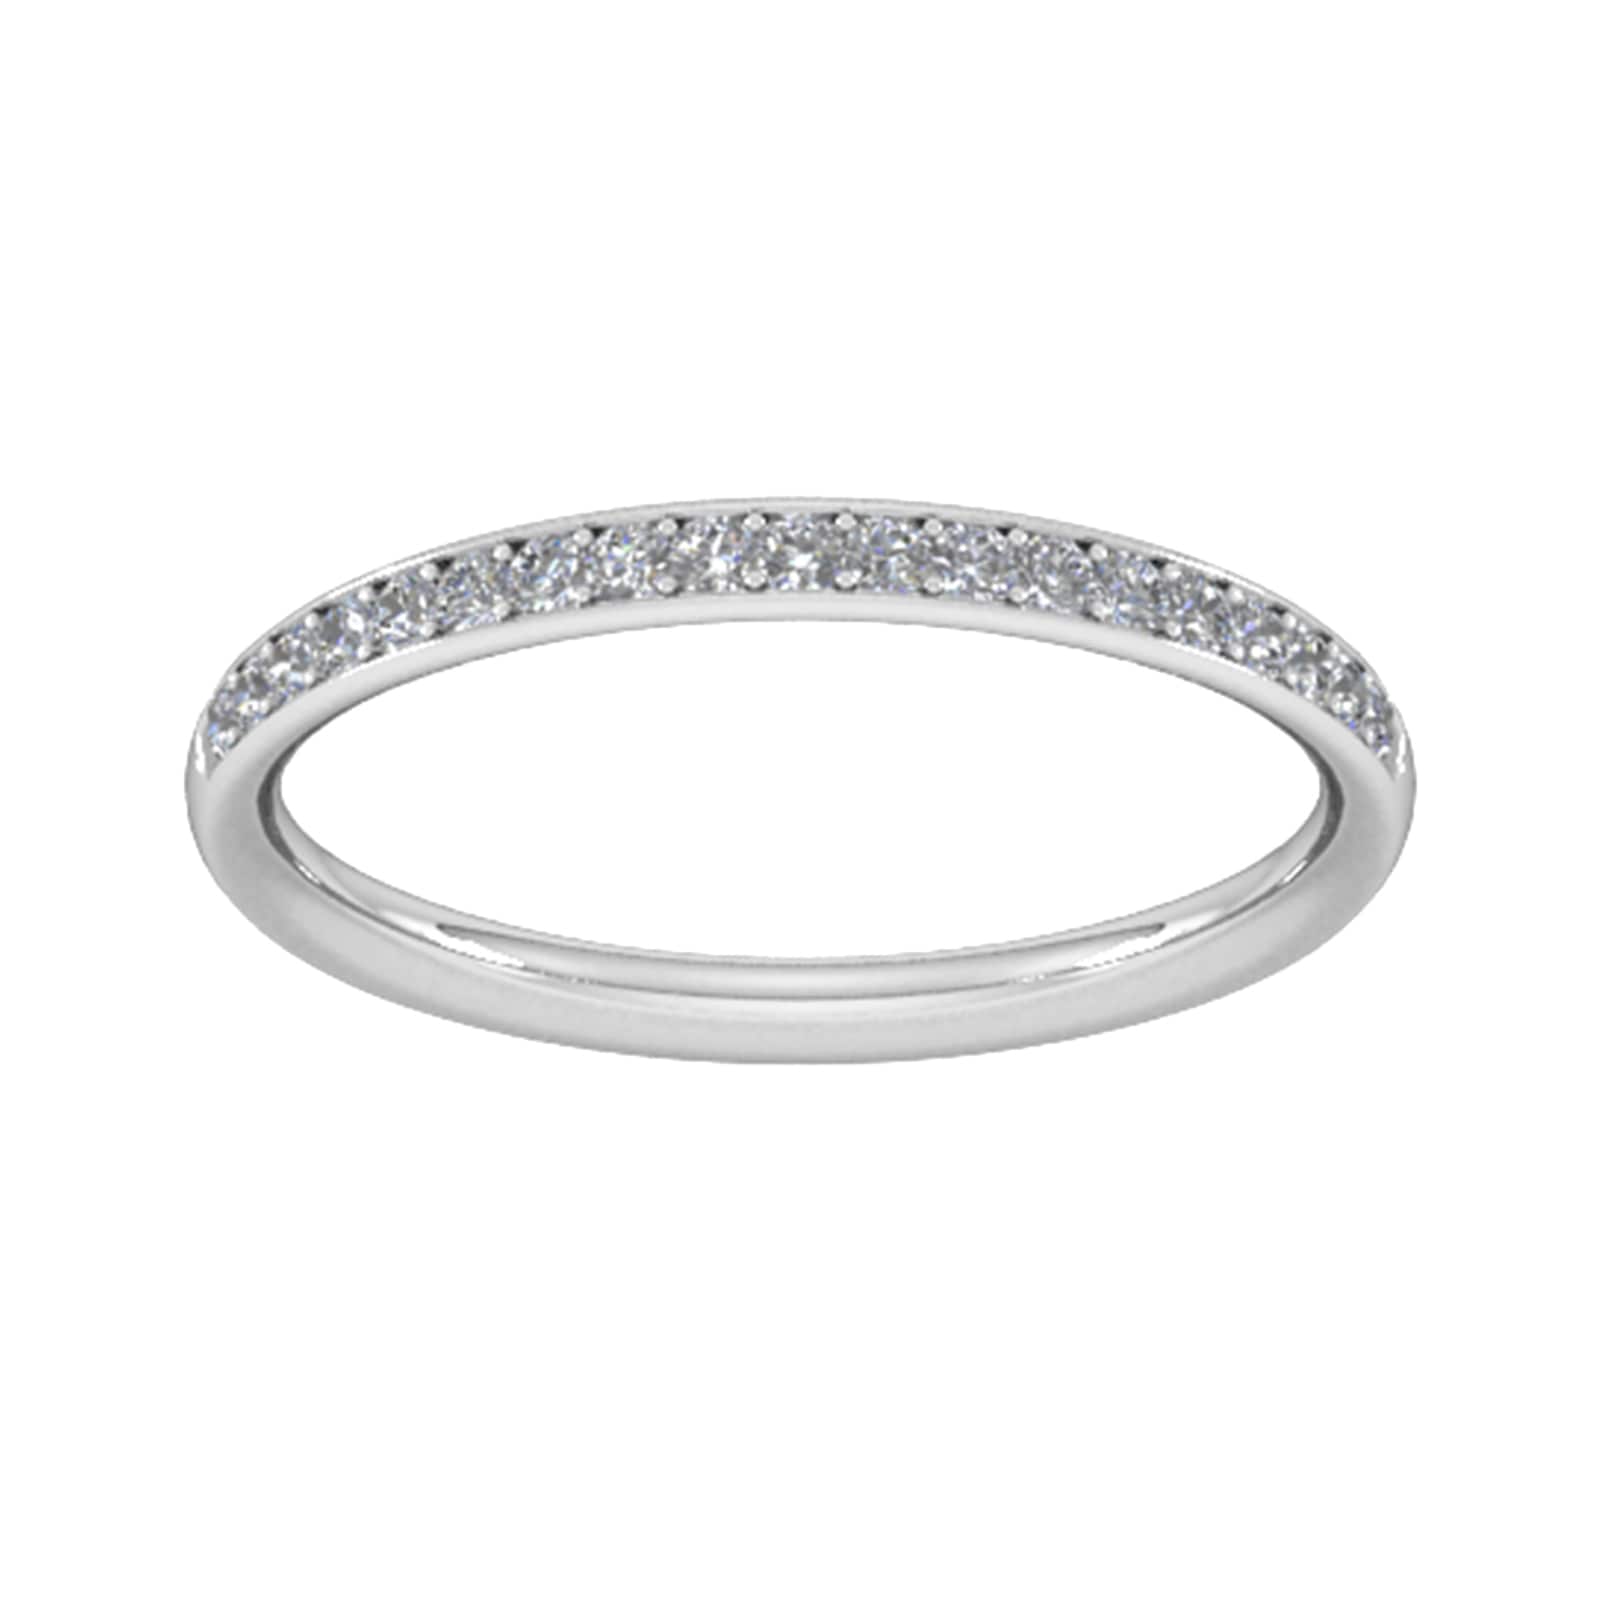 0.18 Carat Total Weight Brilliant Cut Grain Set Diamond Wedding Ring In Platinum - Ring Size S